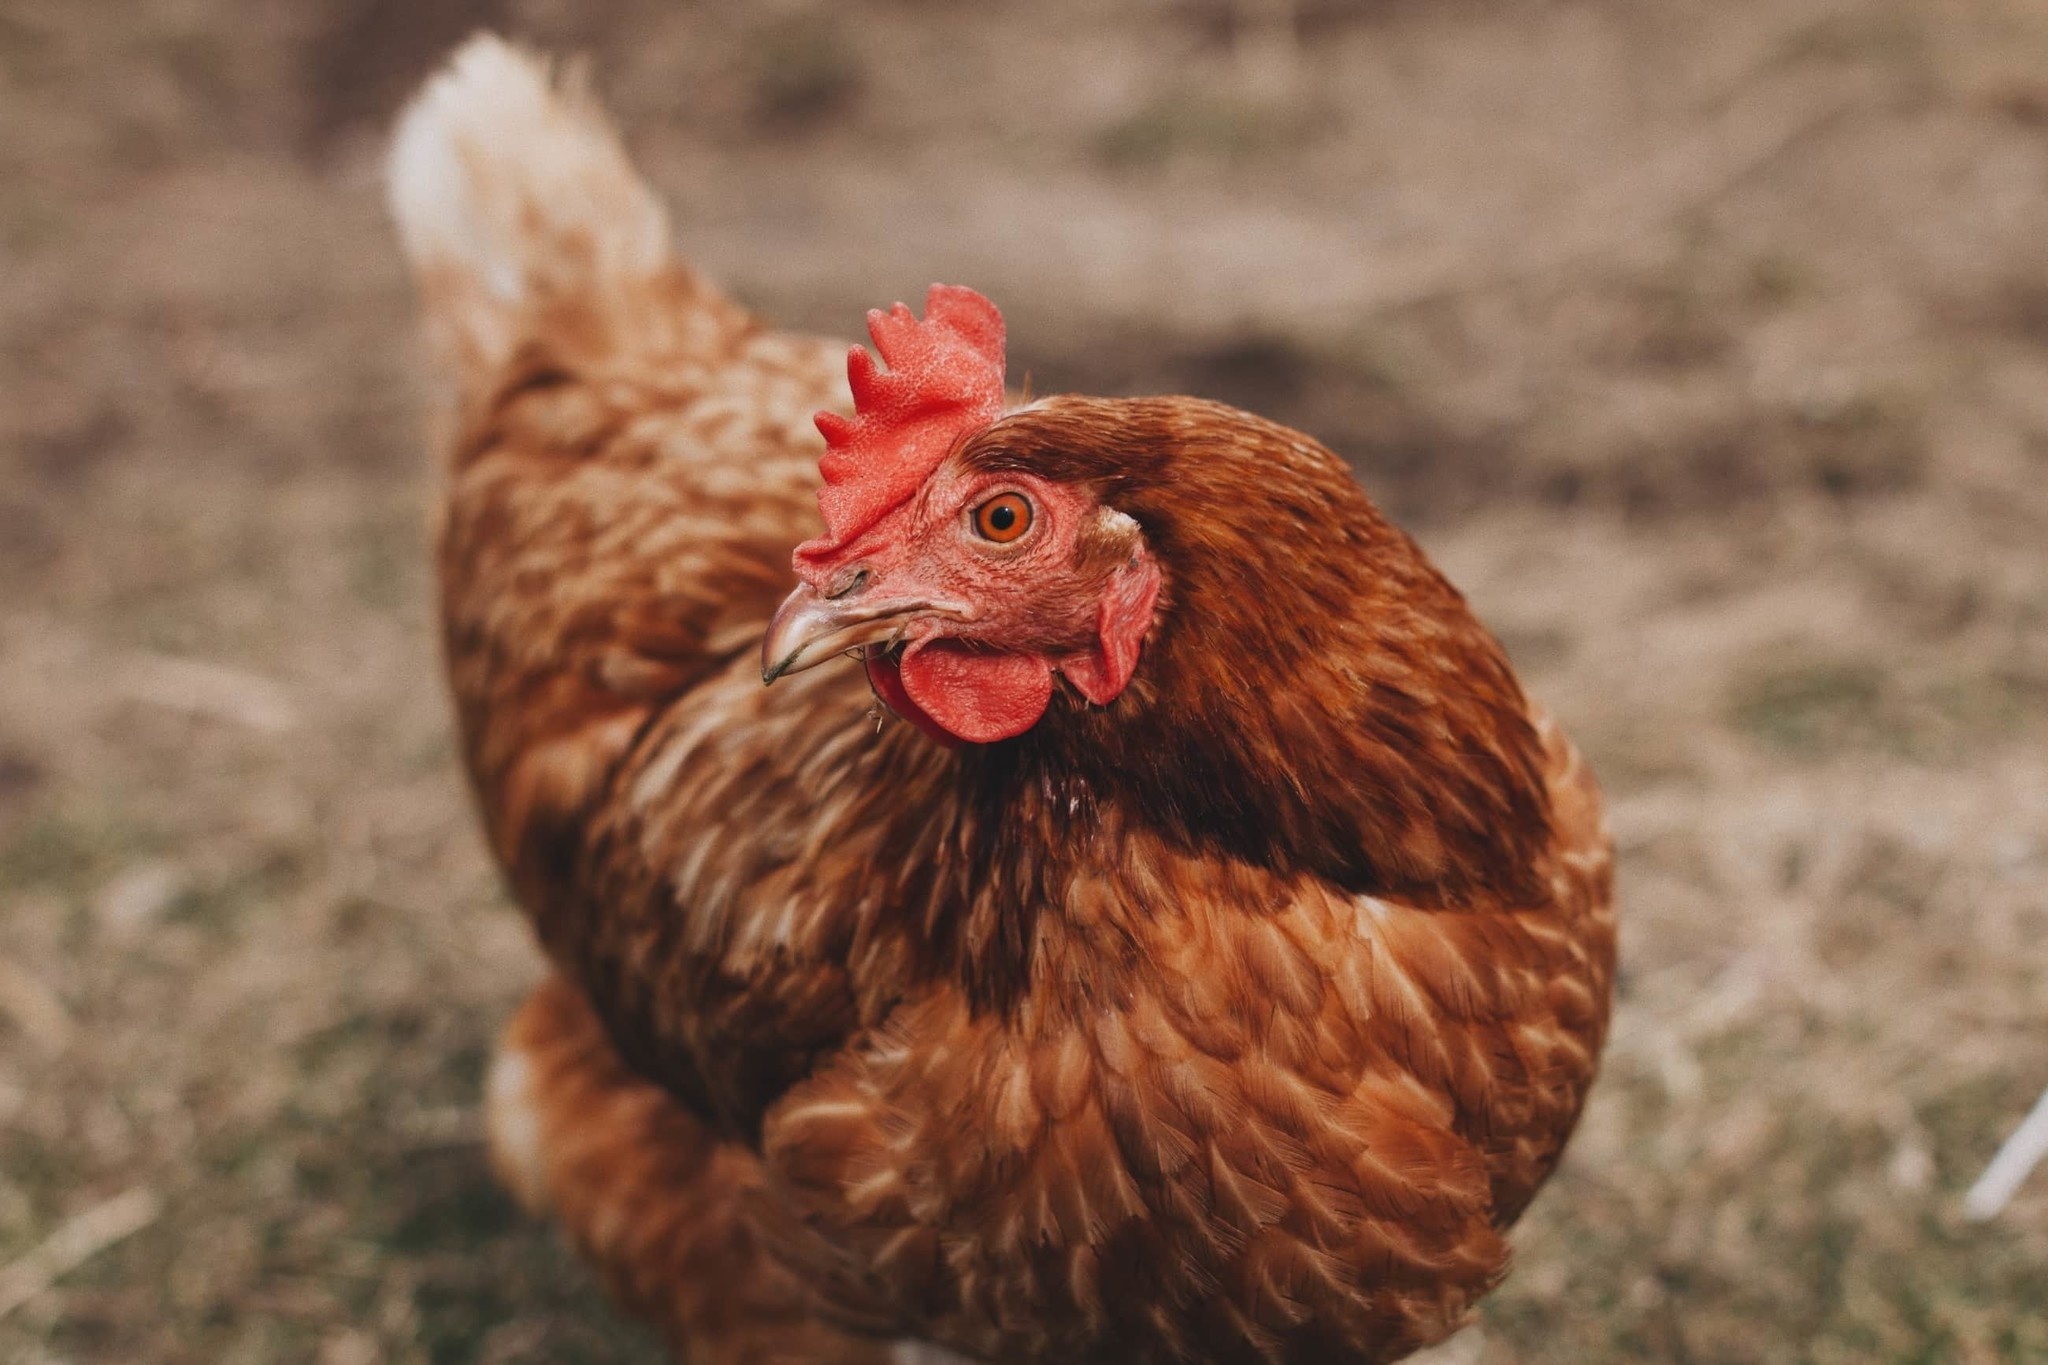 Hoe kun je je kippen stimuleren om eieren te leggen?